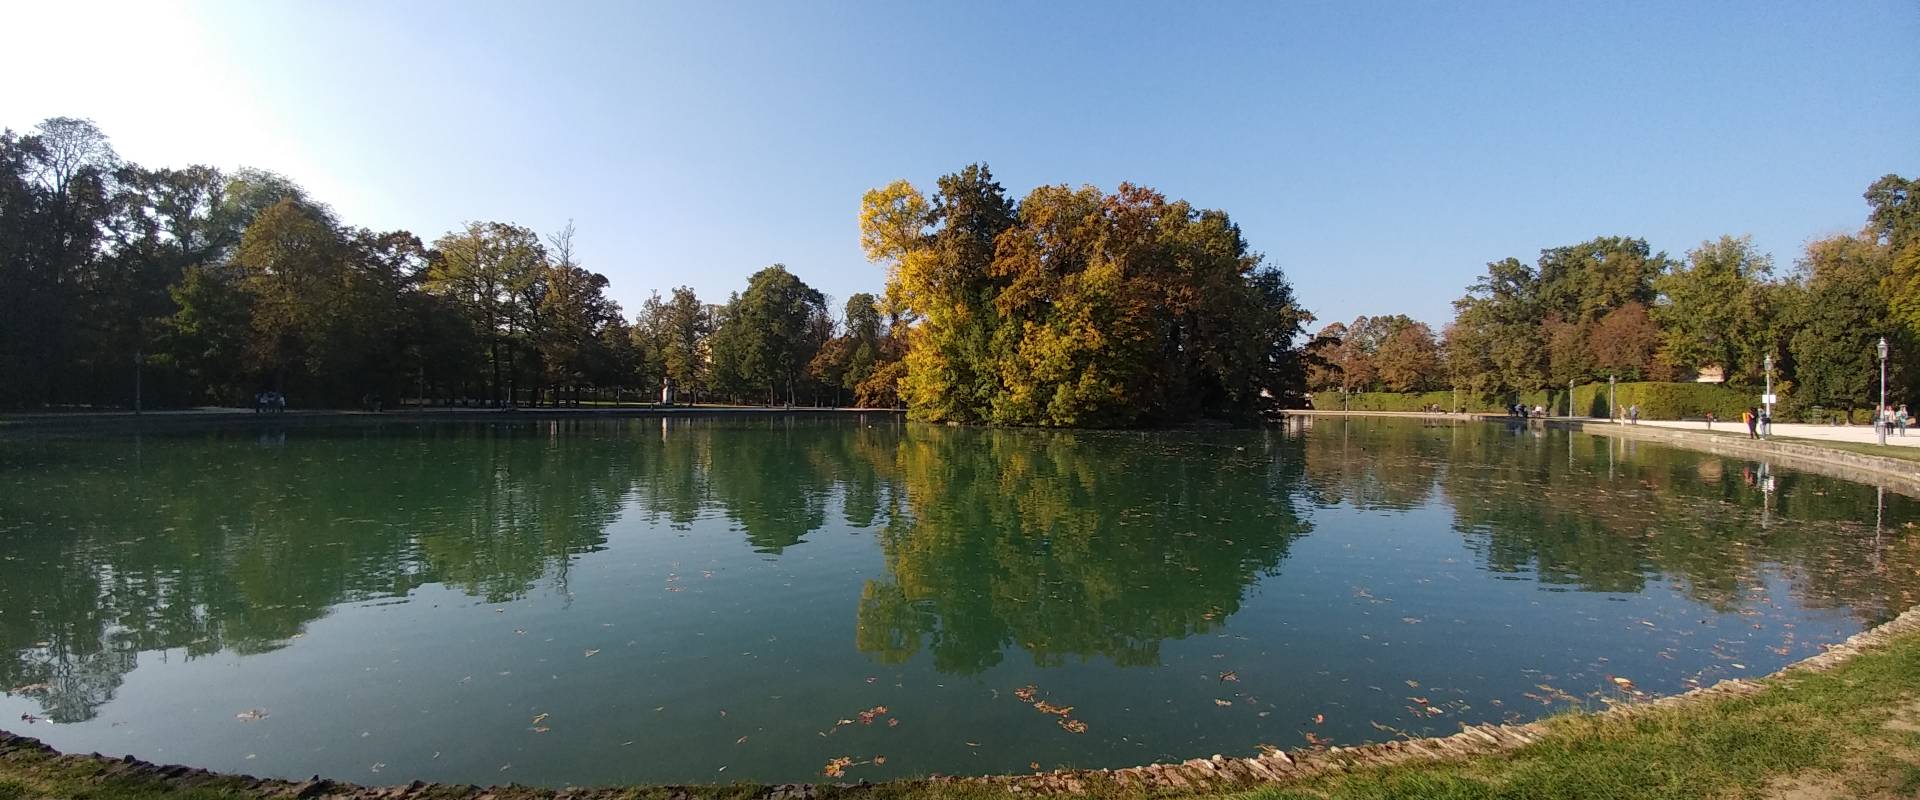 20171015 160620 lago parco ducale foto di Marco Tommesani